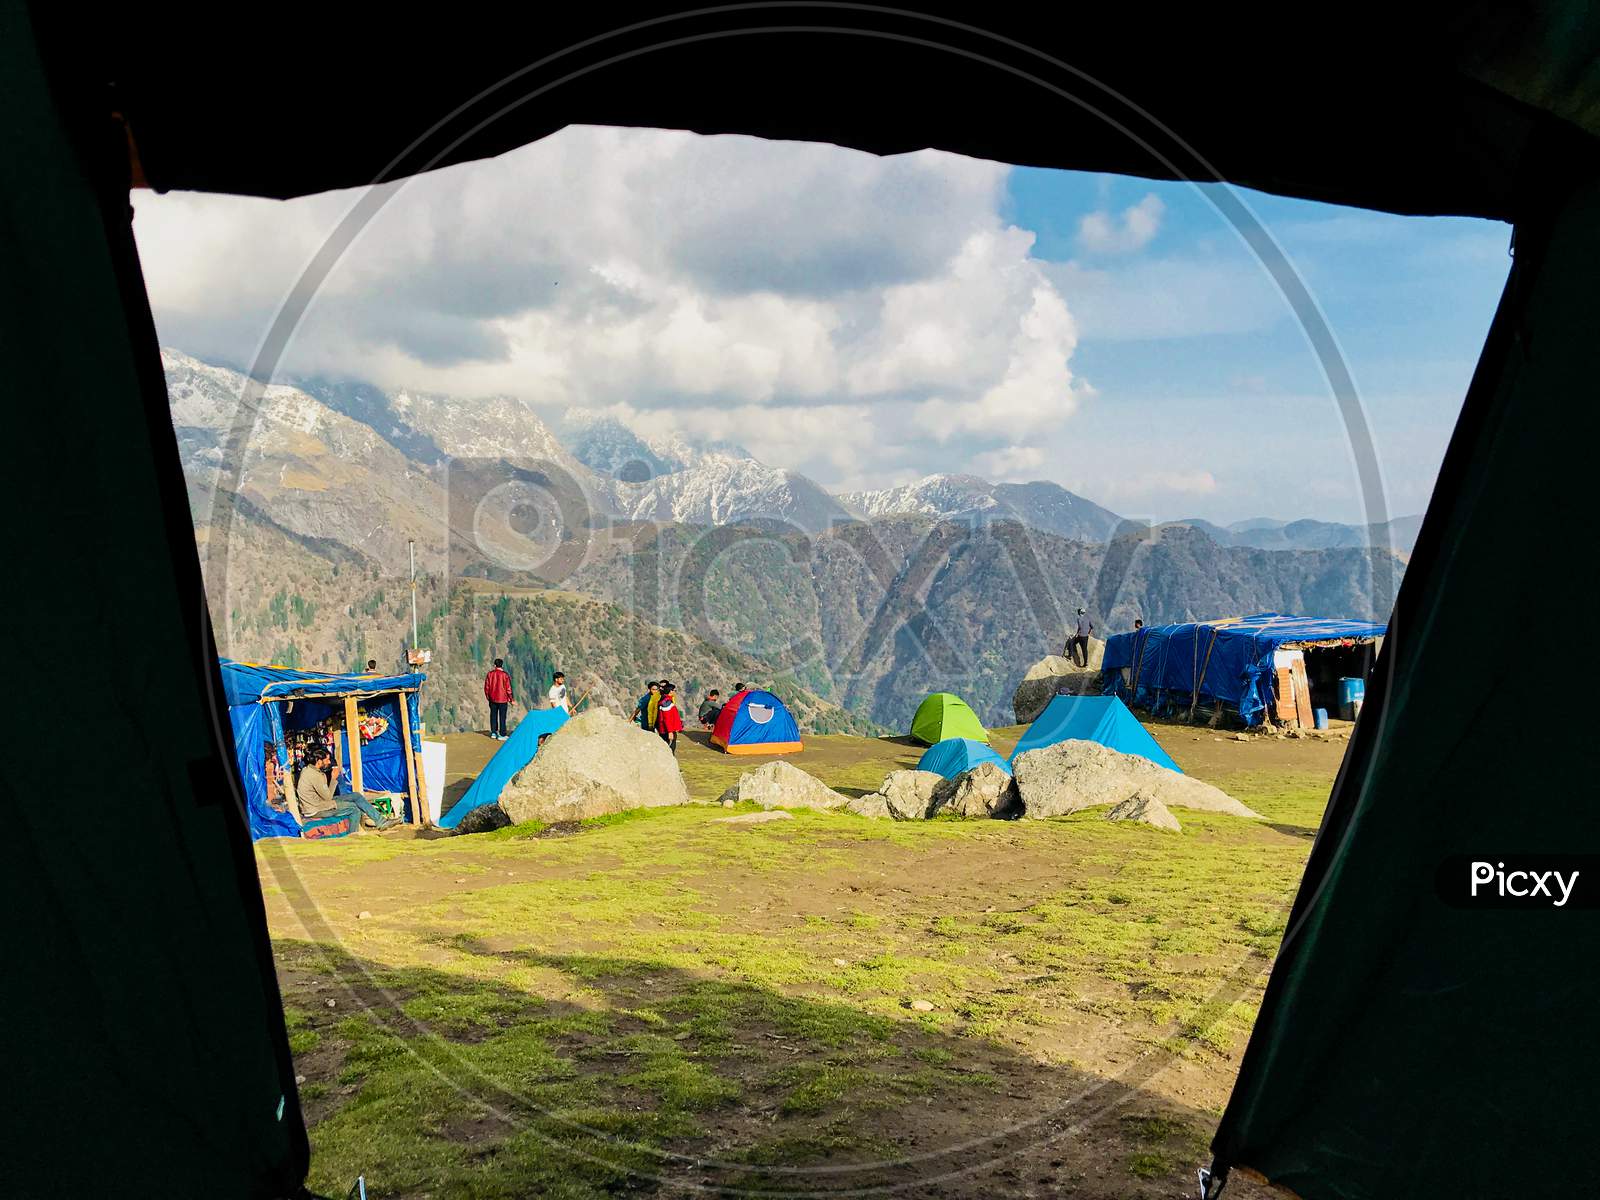 Tent view from hill top - Triund Top, Mcleodganj, Himachal Pradesh.